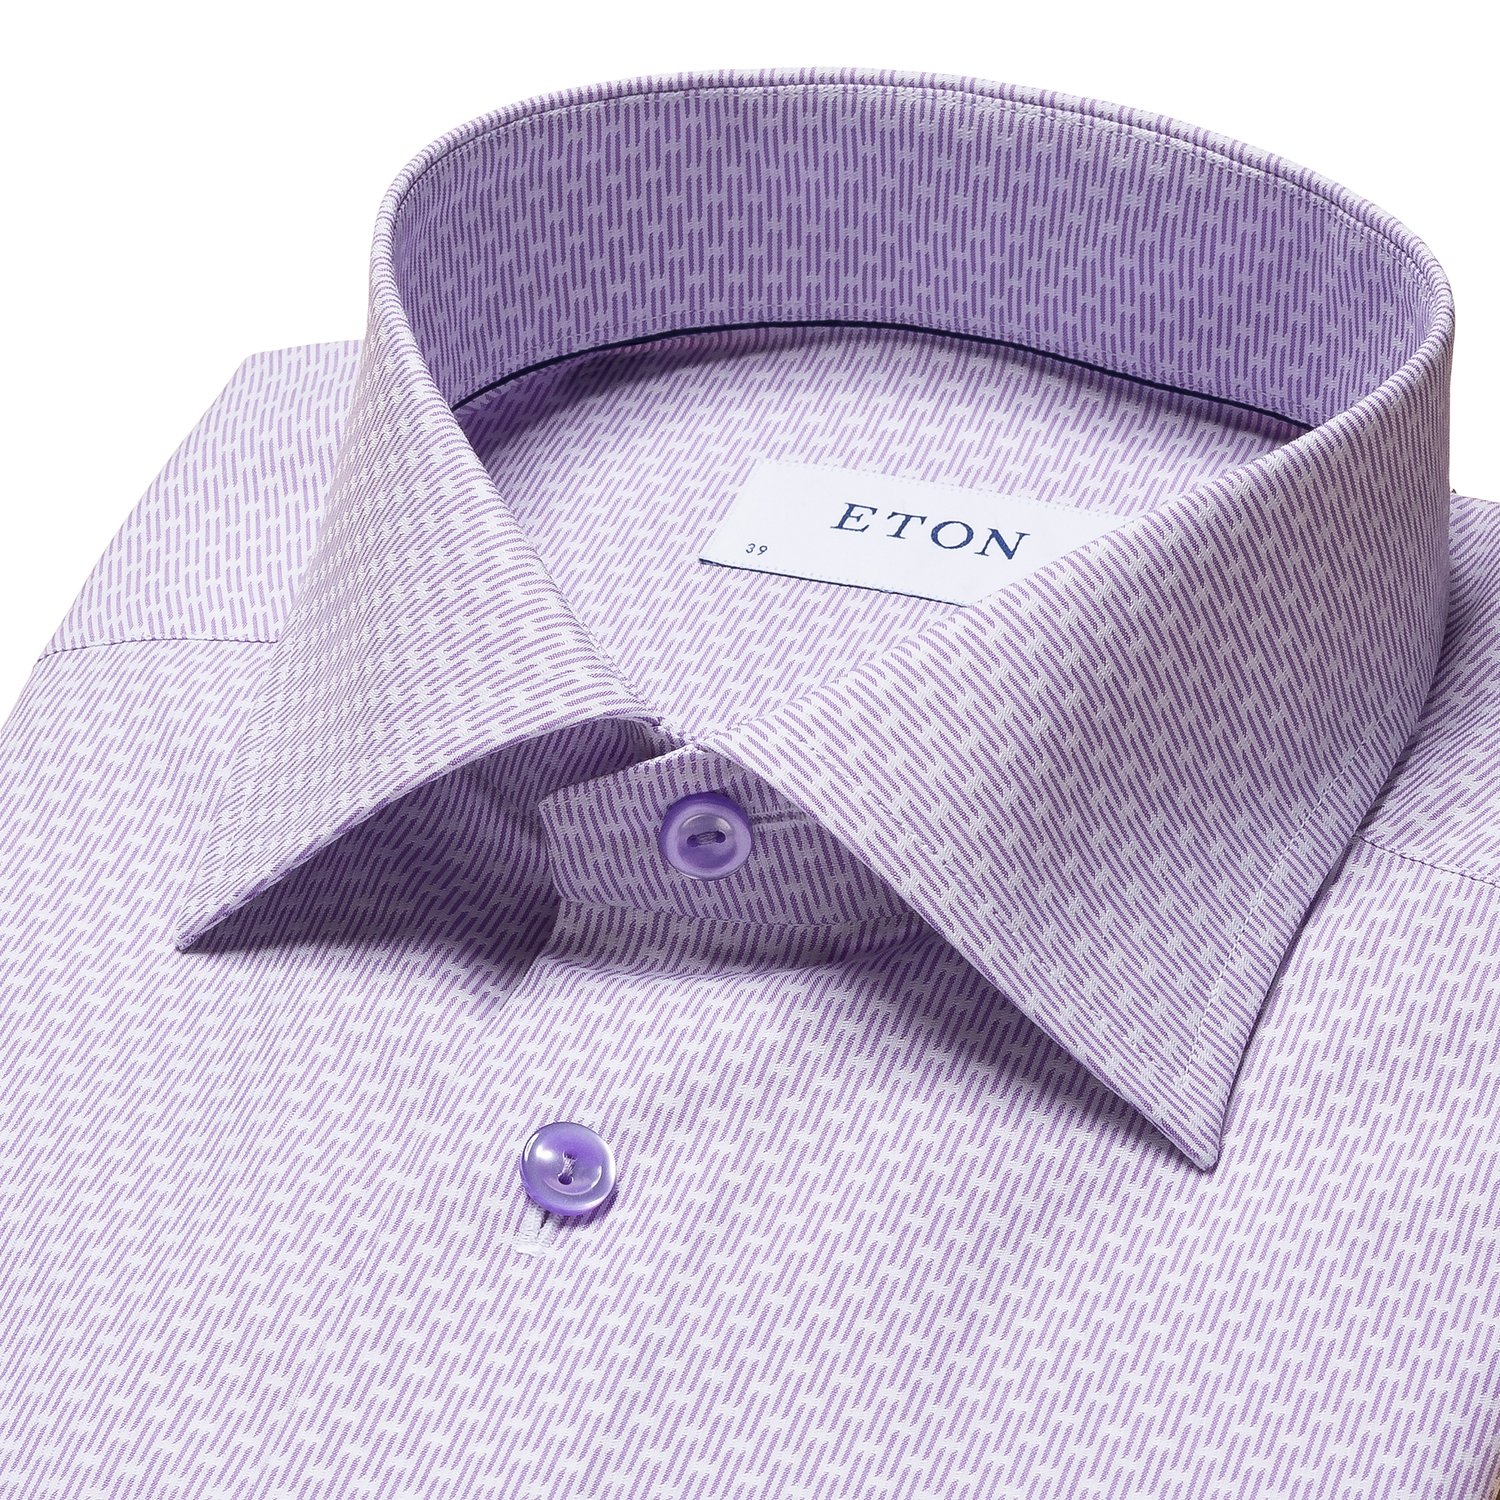 Eton Contemporary Fit, Twill Dress Shirt in Purple with Subtle Print — Uomo San Francisco | Luxury European Menswear